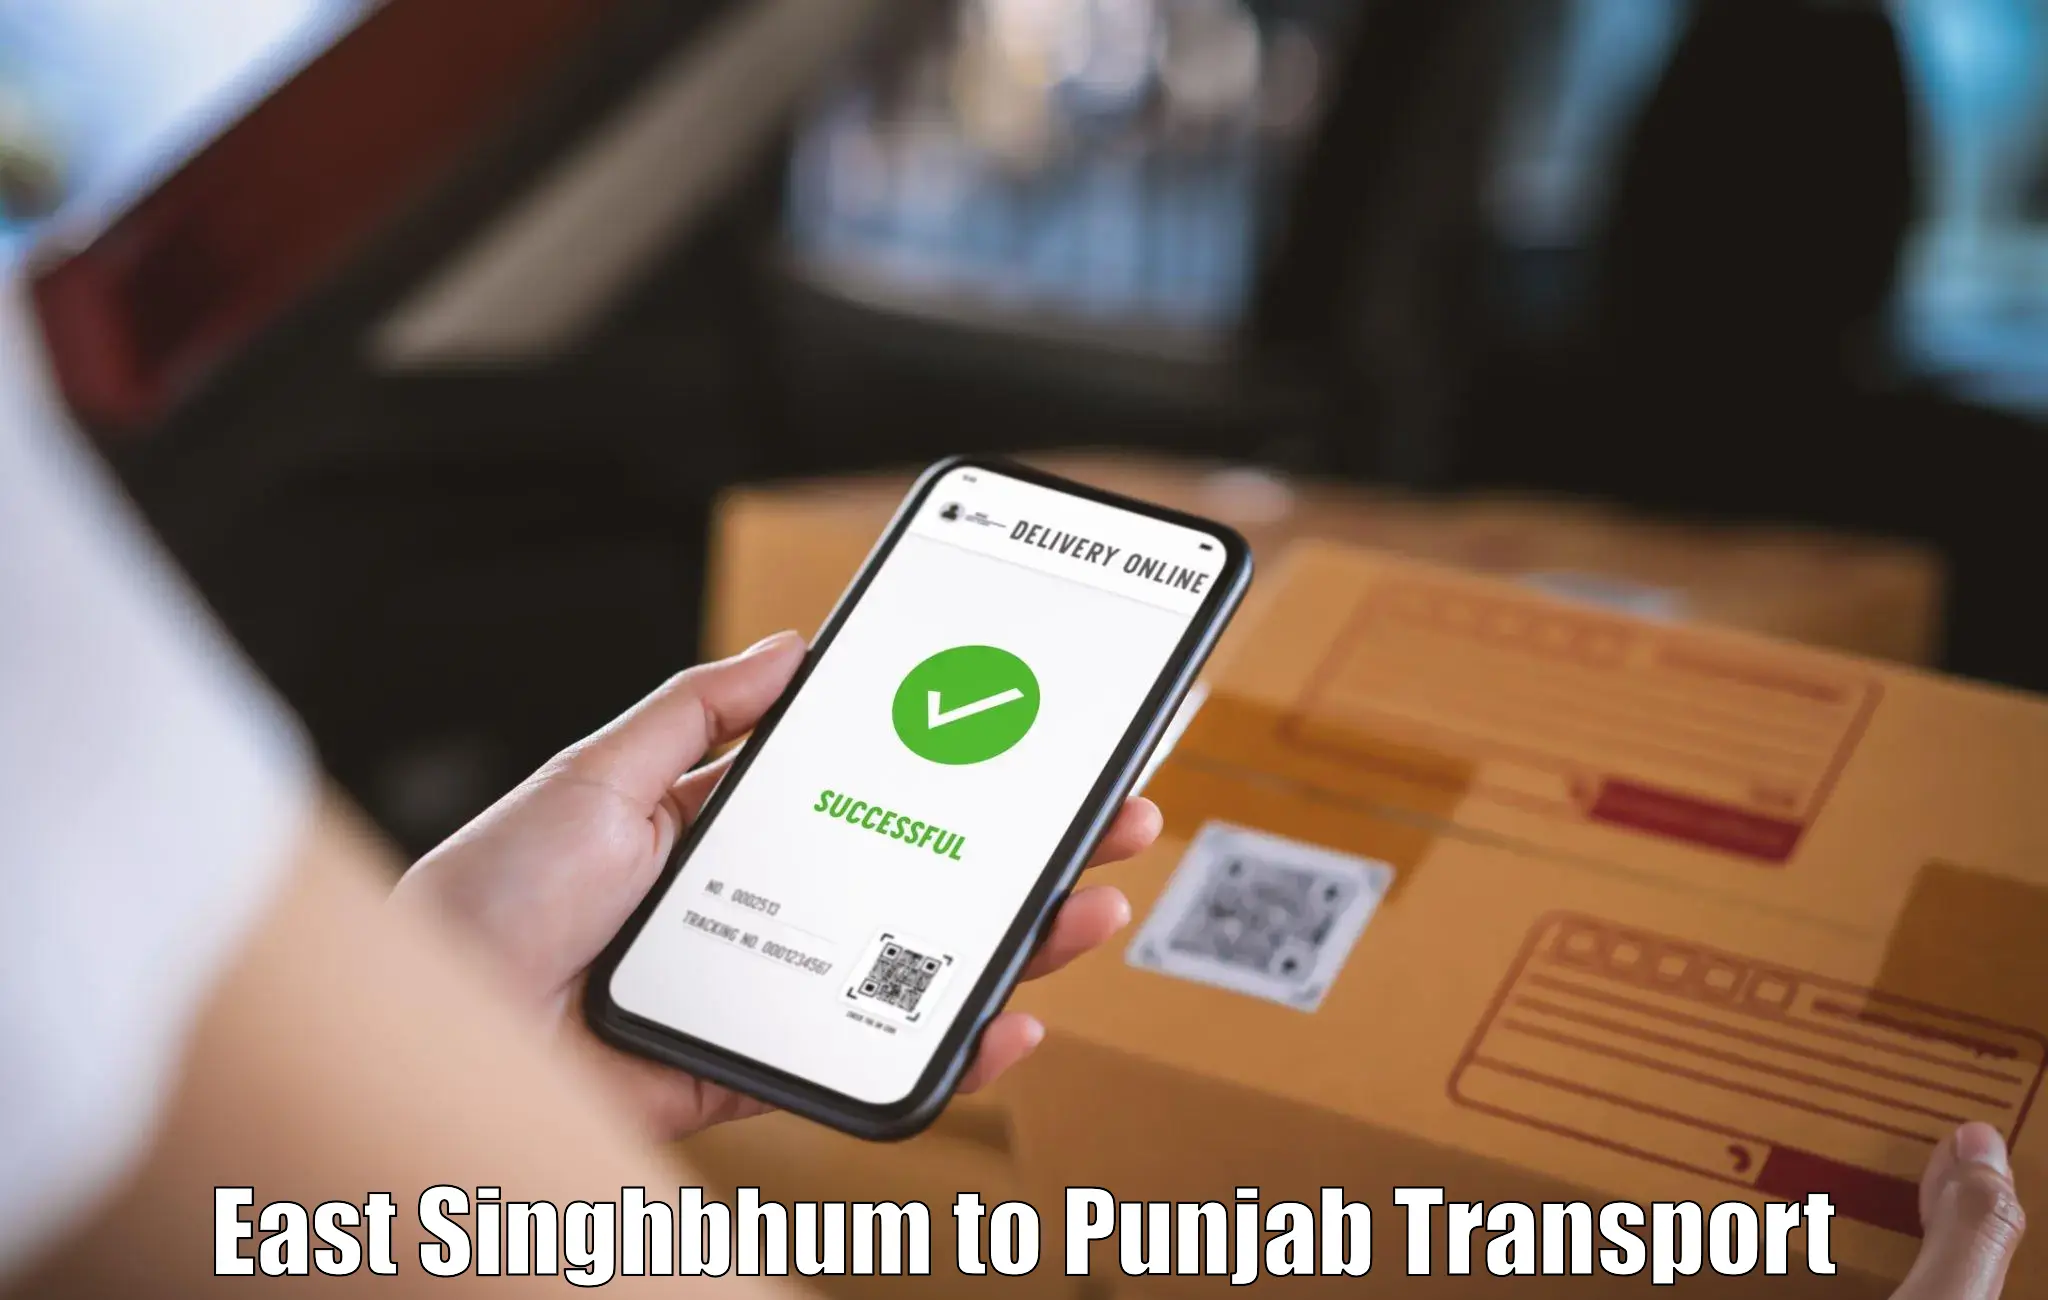 Intercity transport in East Singhbhum to Punjab